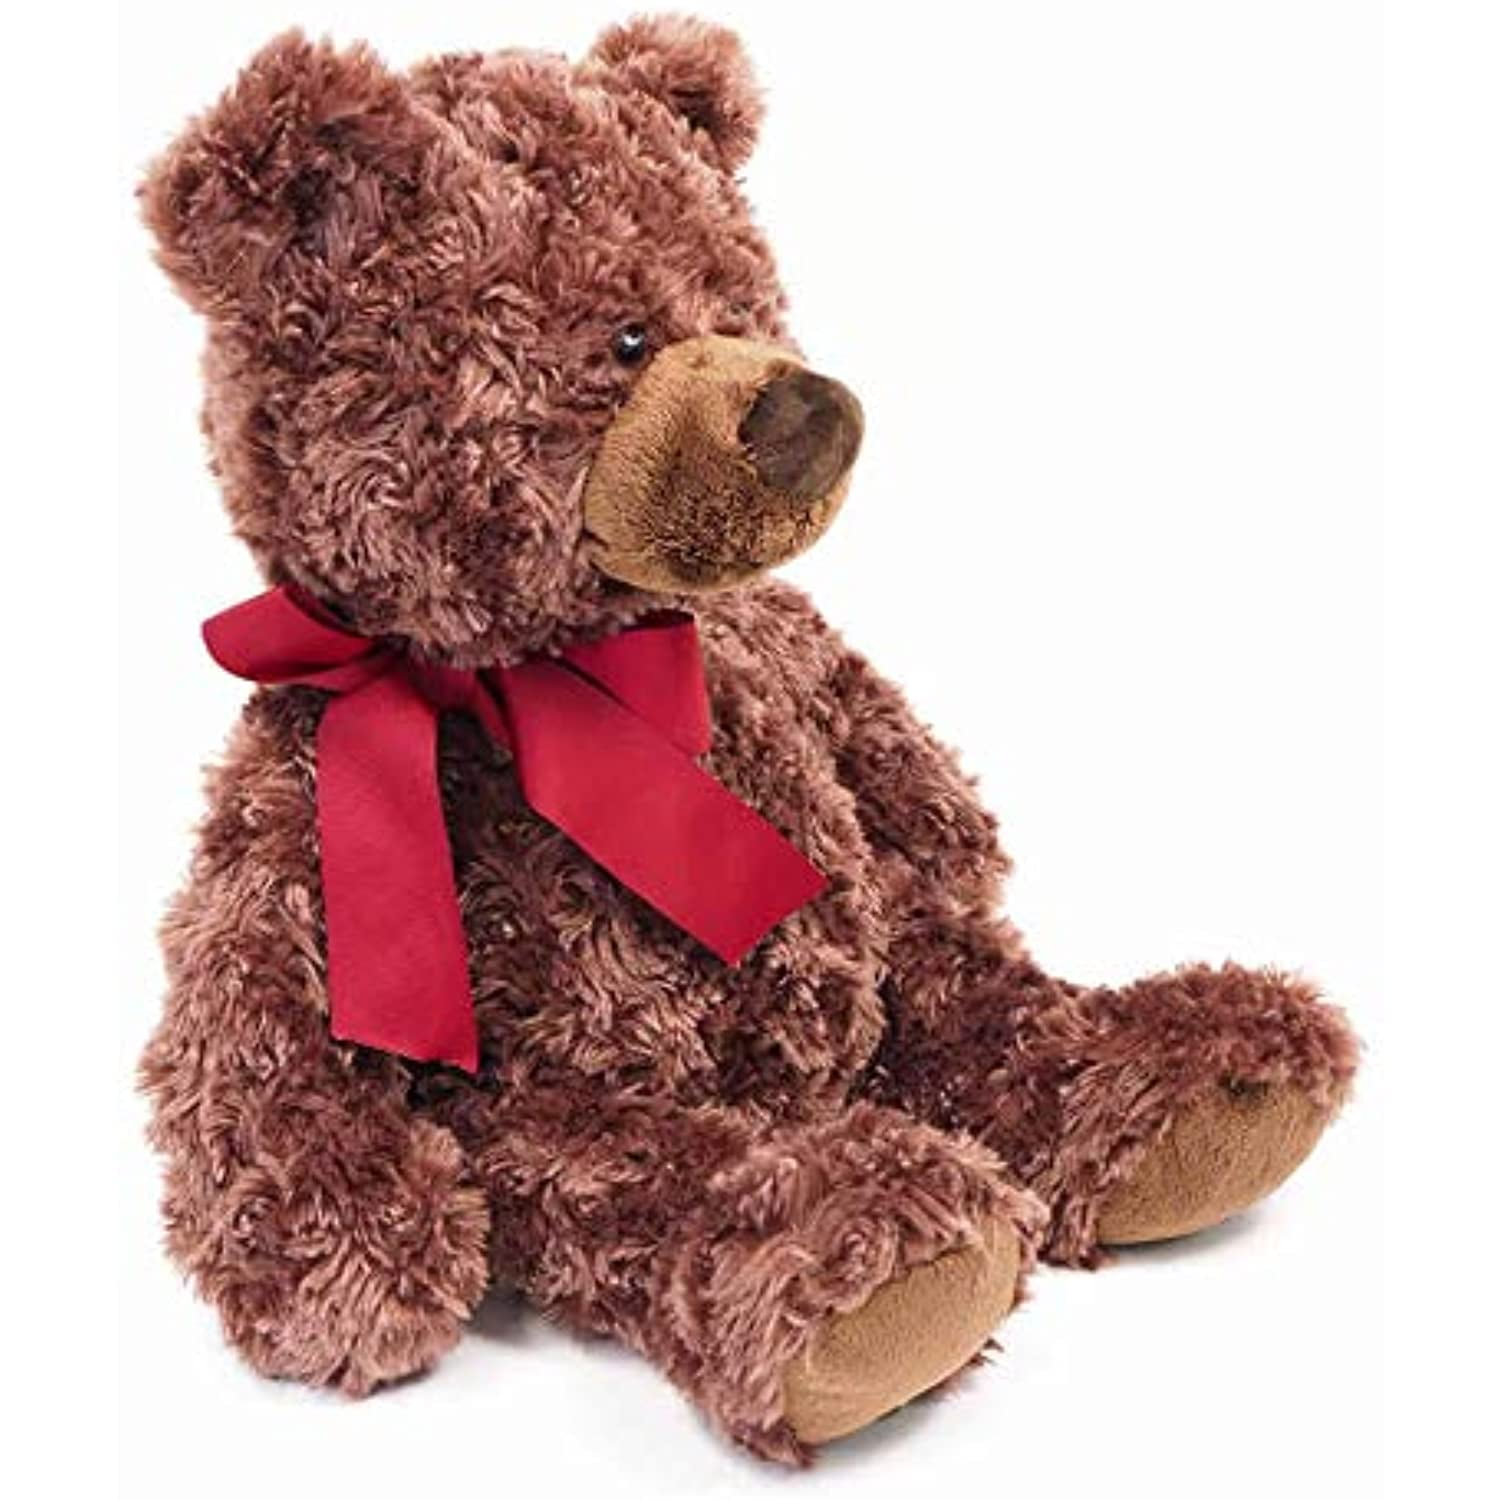 18" GUND Valentine's Day Hart Teddy Bear Stuffed Animal Chocolate Brown 